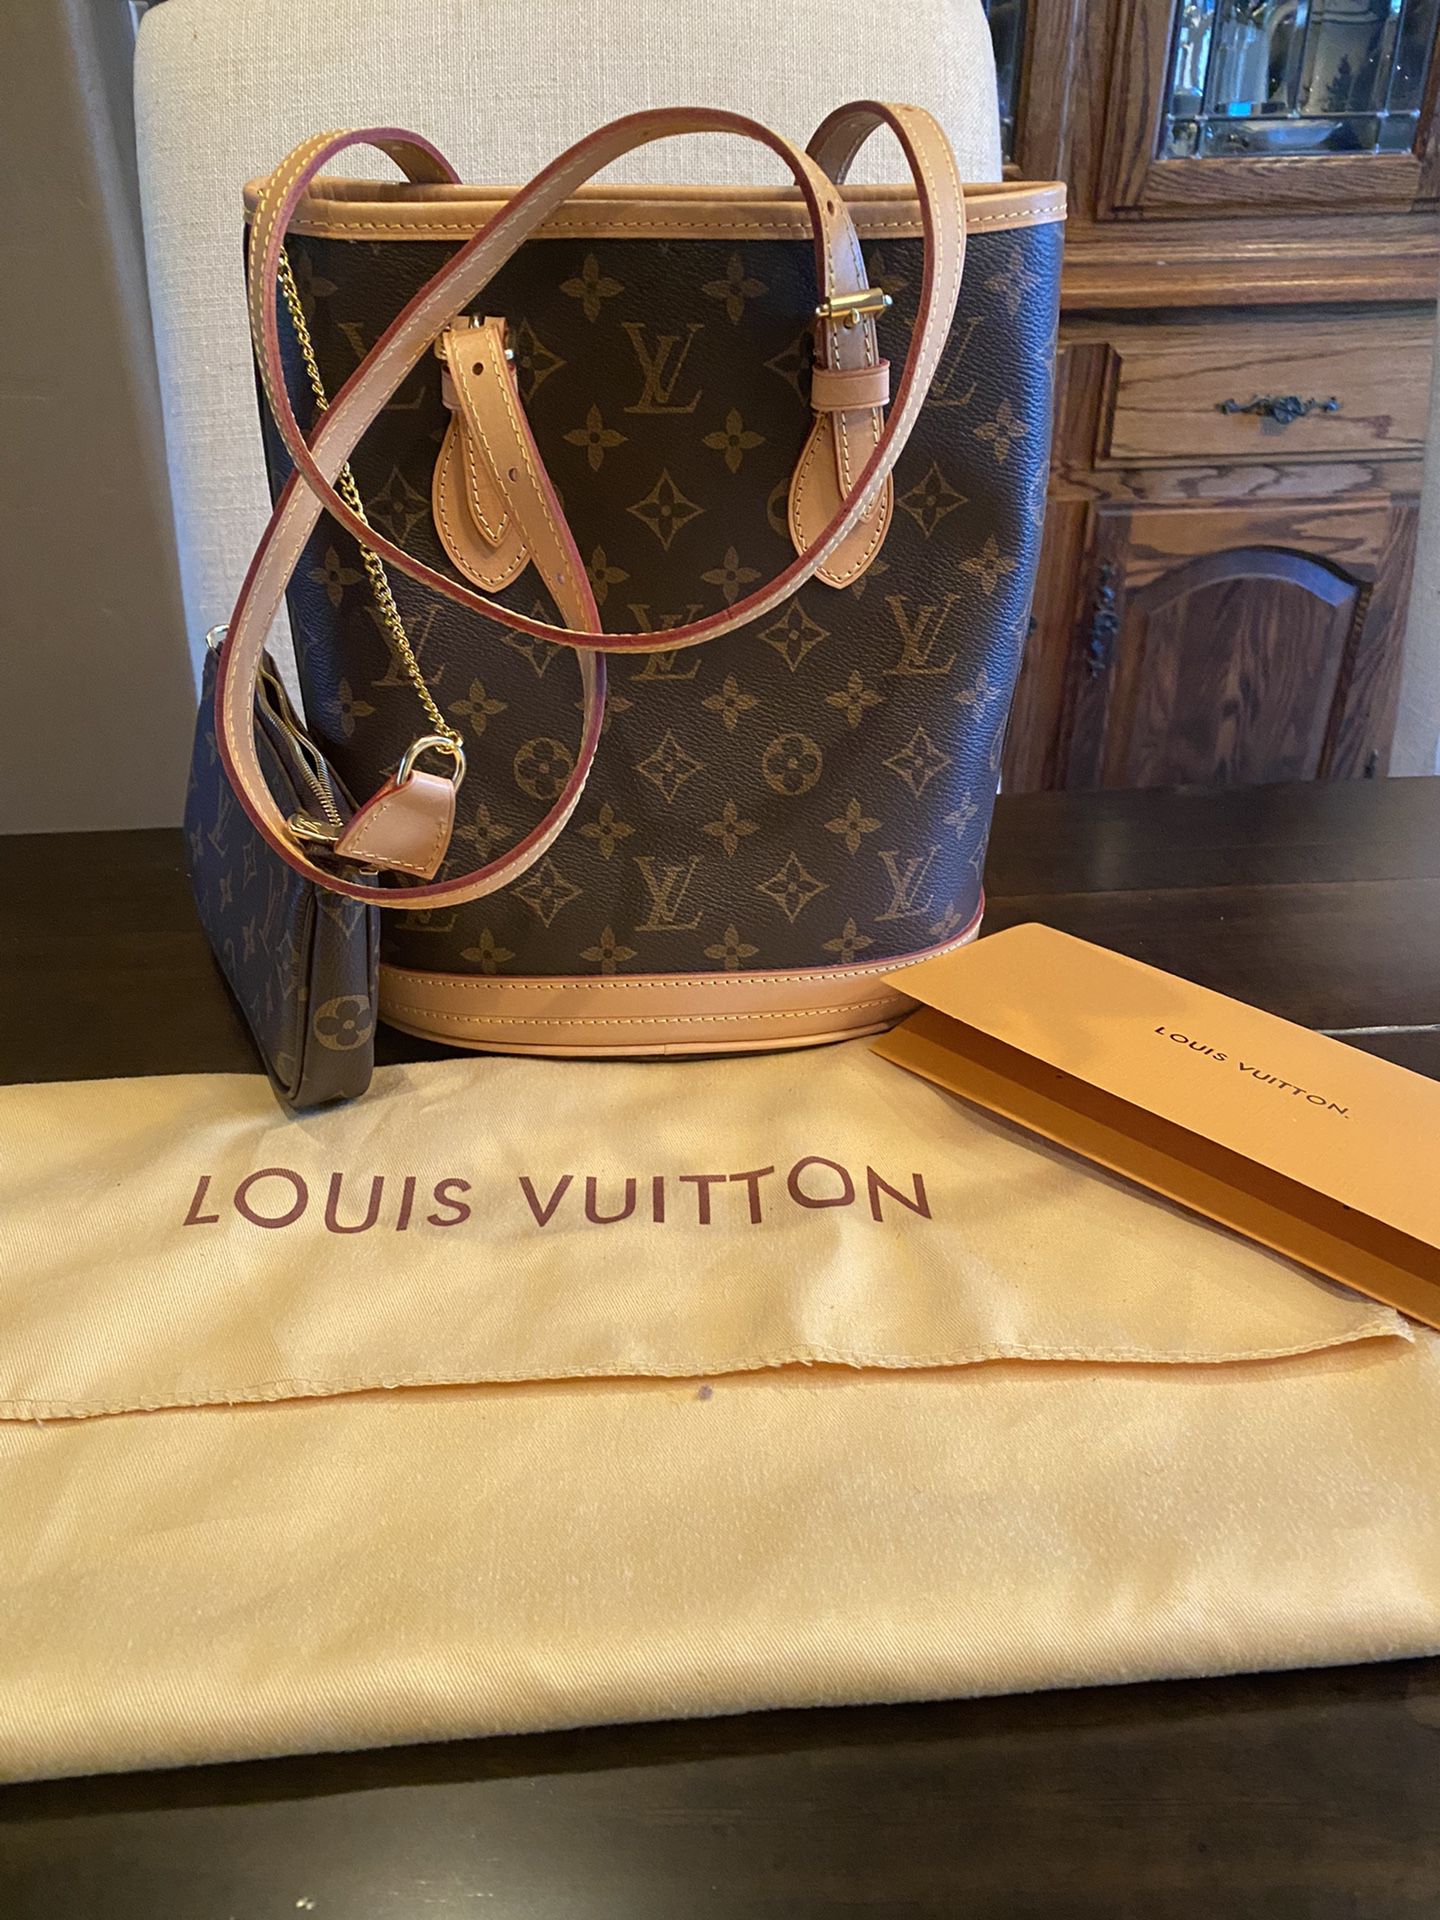 Louis Vuitton Petite Bucket Bag Monogram for Sale in Temecula, CA - OfferUp